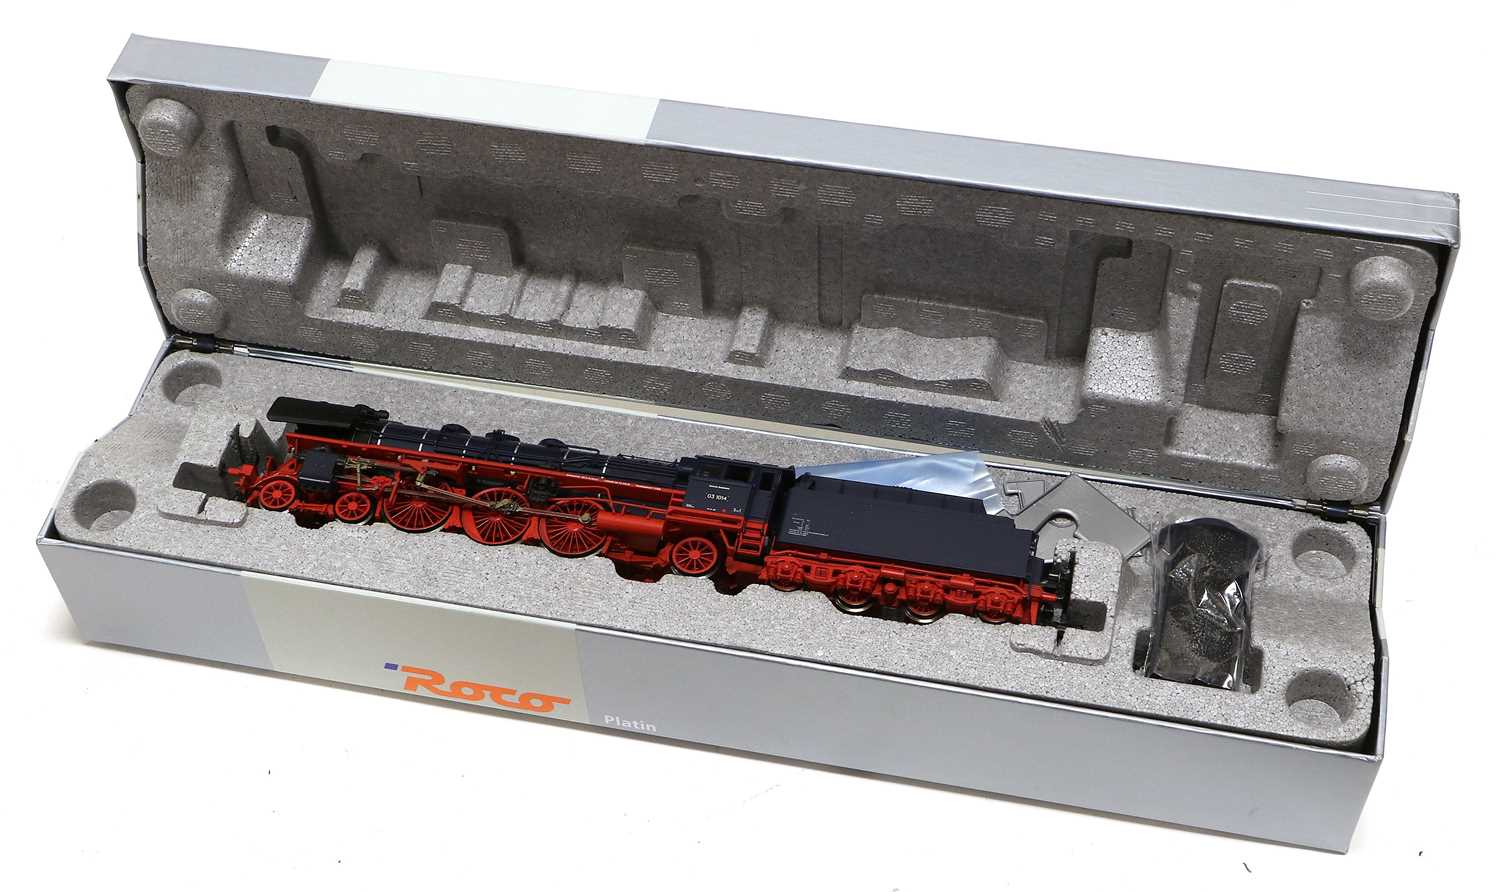 Roco Platin HO Gauge 63281 4-6-2 DB 03 1014 Locomotive